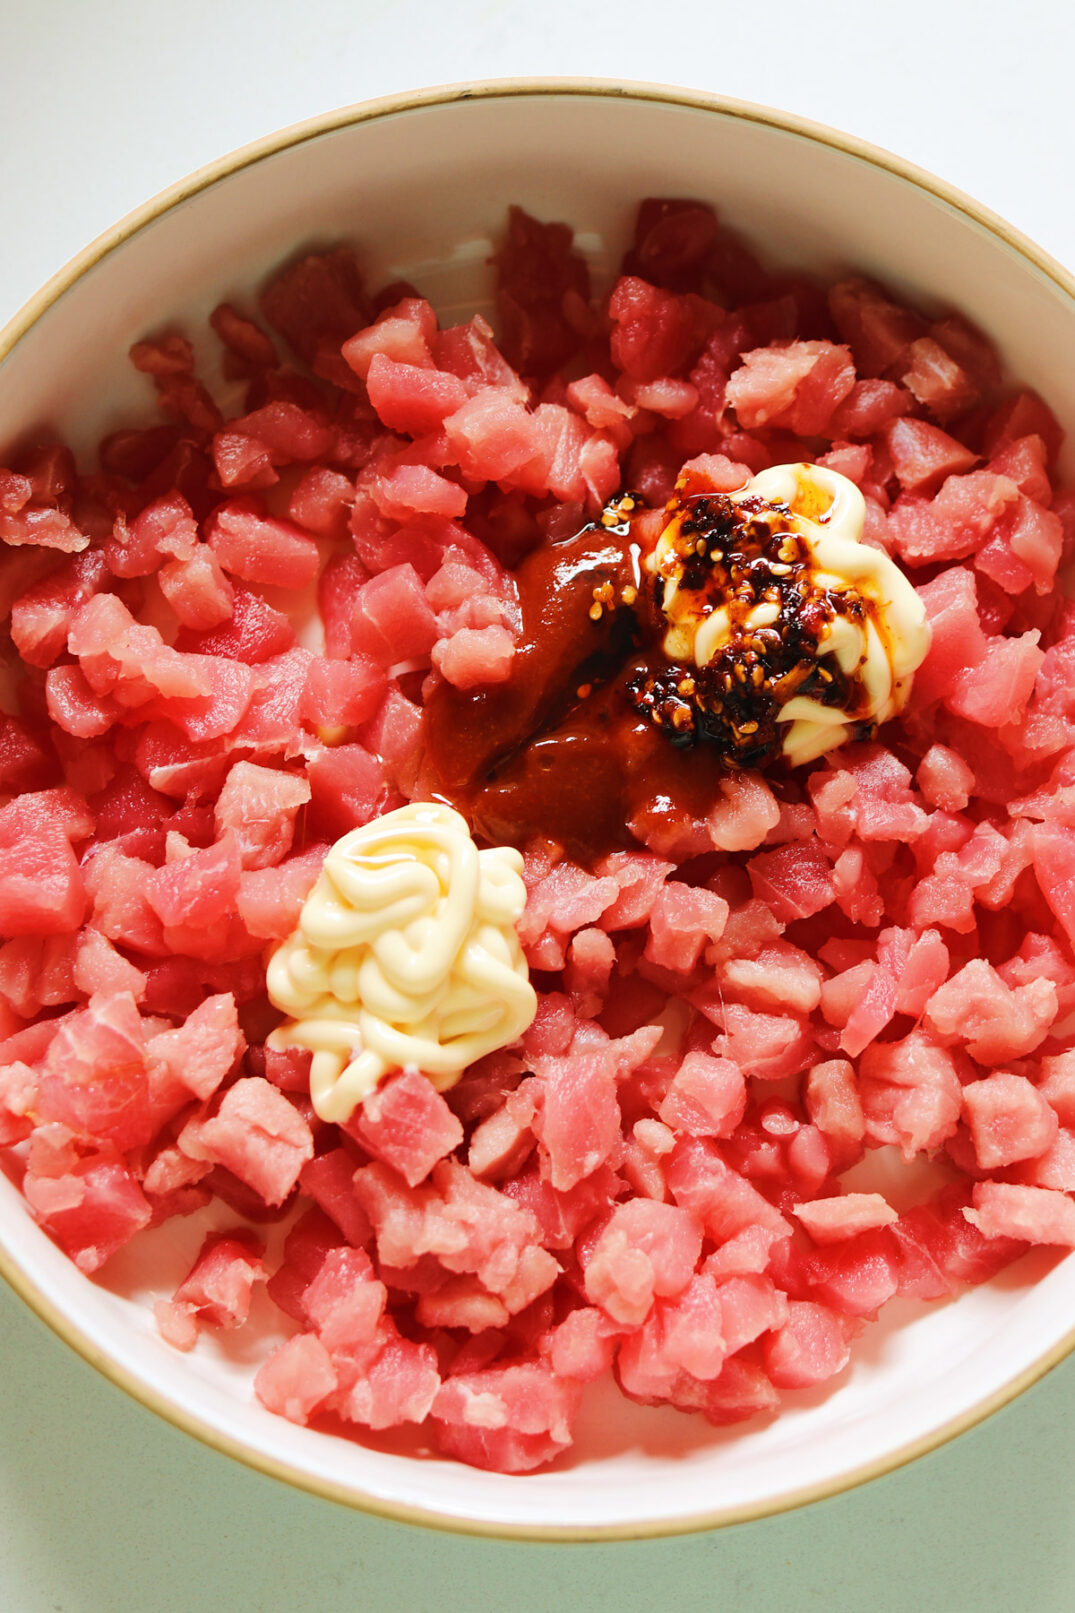 sushi grade tuna diced up with kewpie japanese mayonnaise, sriracha, sesame oil and crispy chili oil.